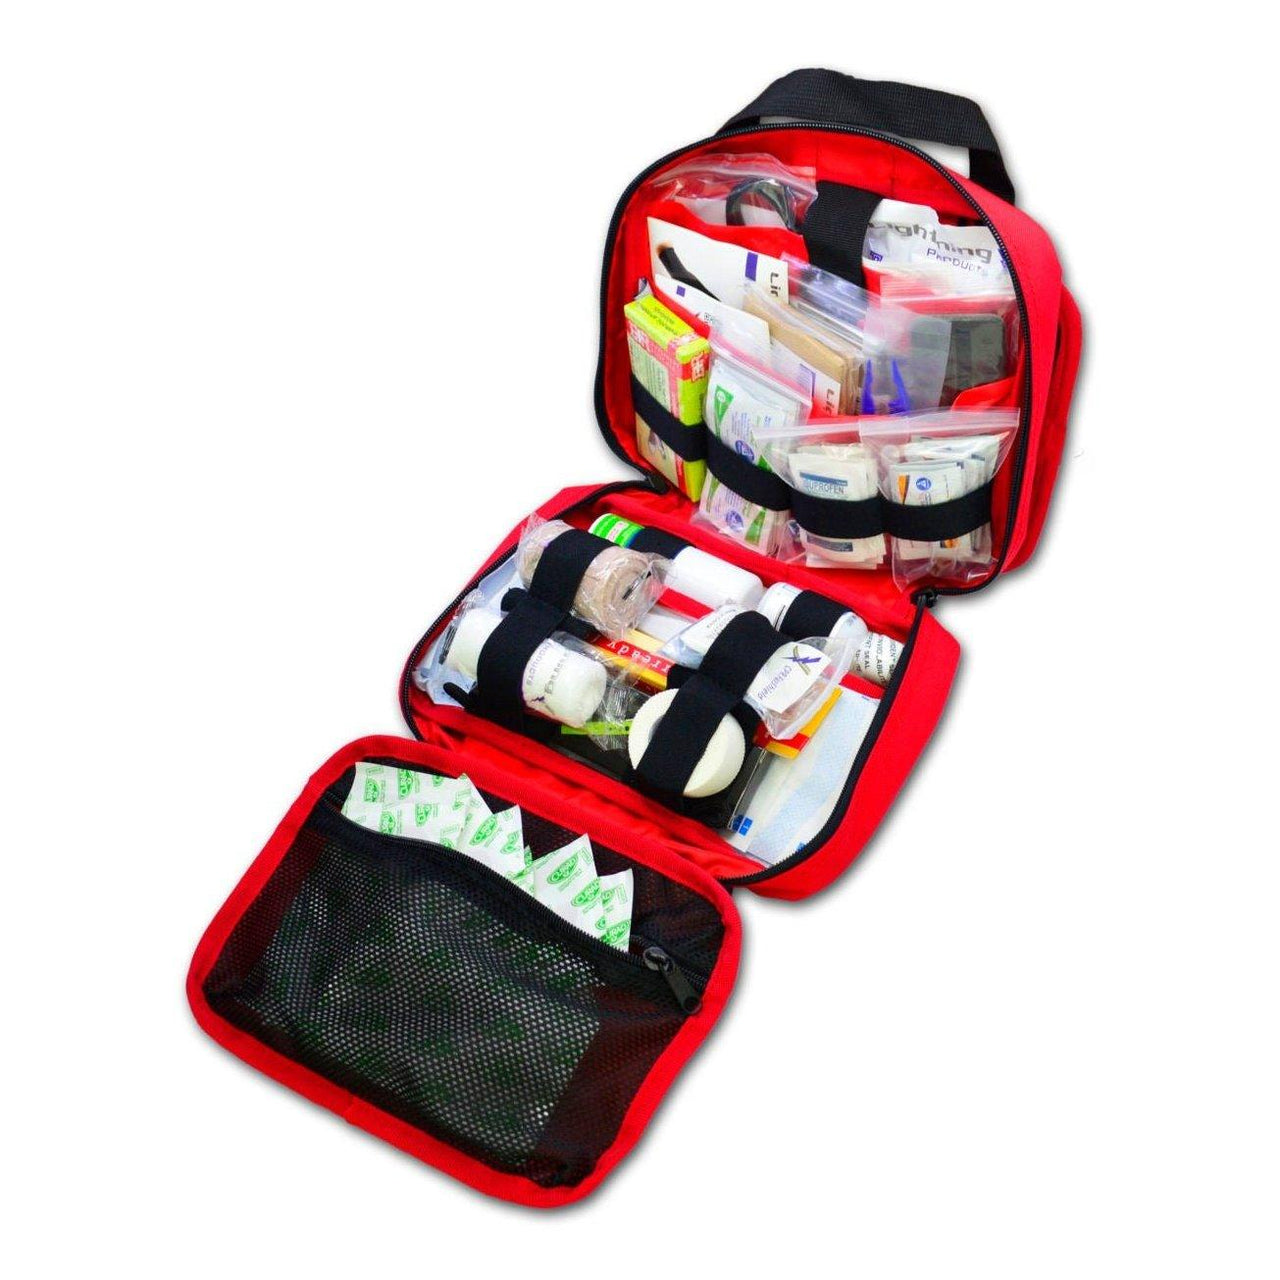 MEDIC-X Vehicle First Aid Kit - Vendor